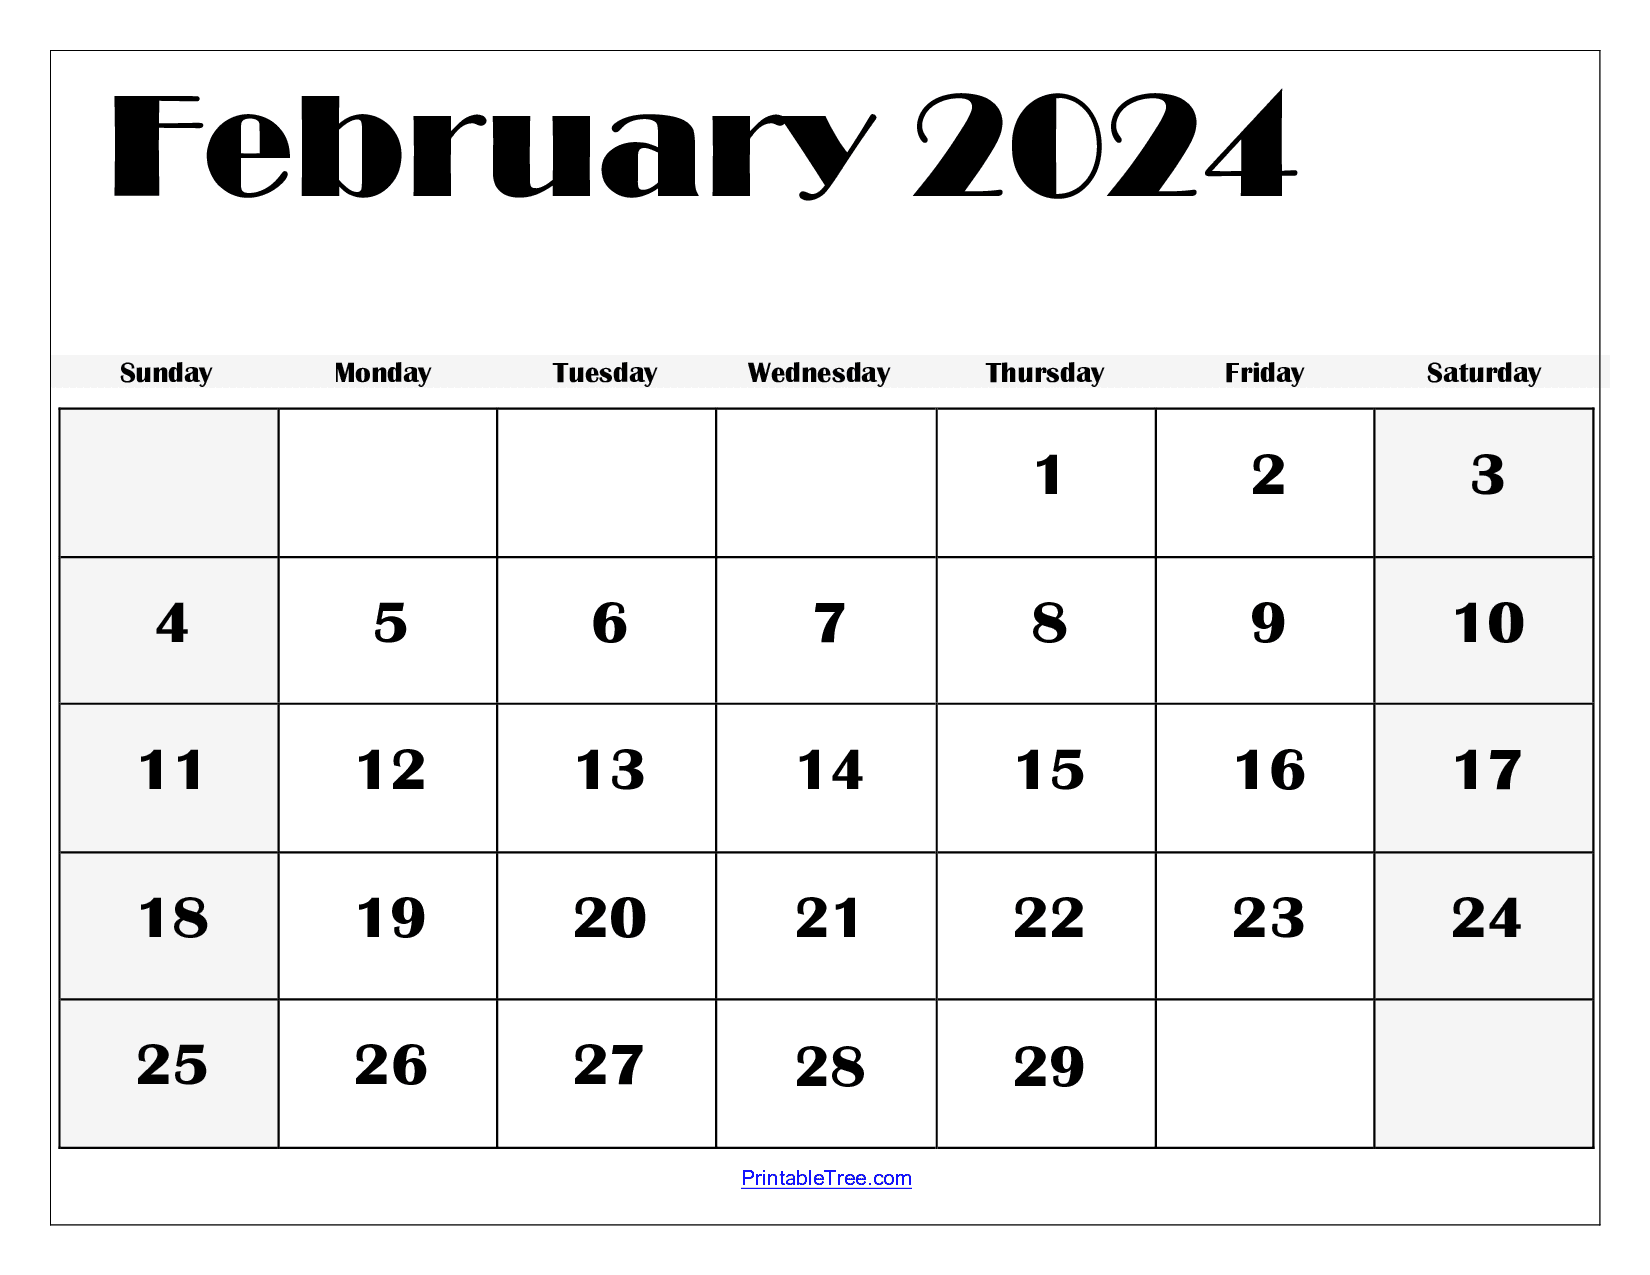 February 2024 Calendar Printable Pdf Template With Holidays for February 2024 Calendar Page Printable